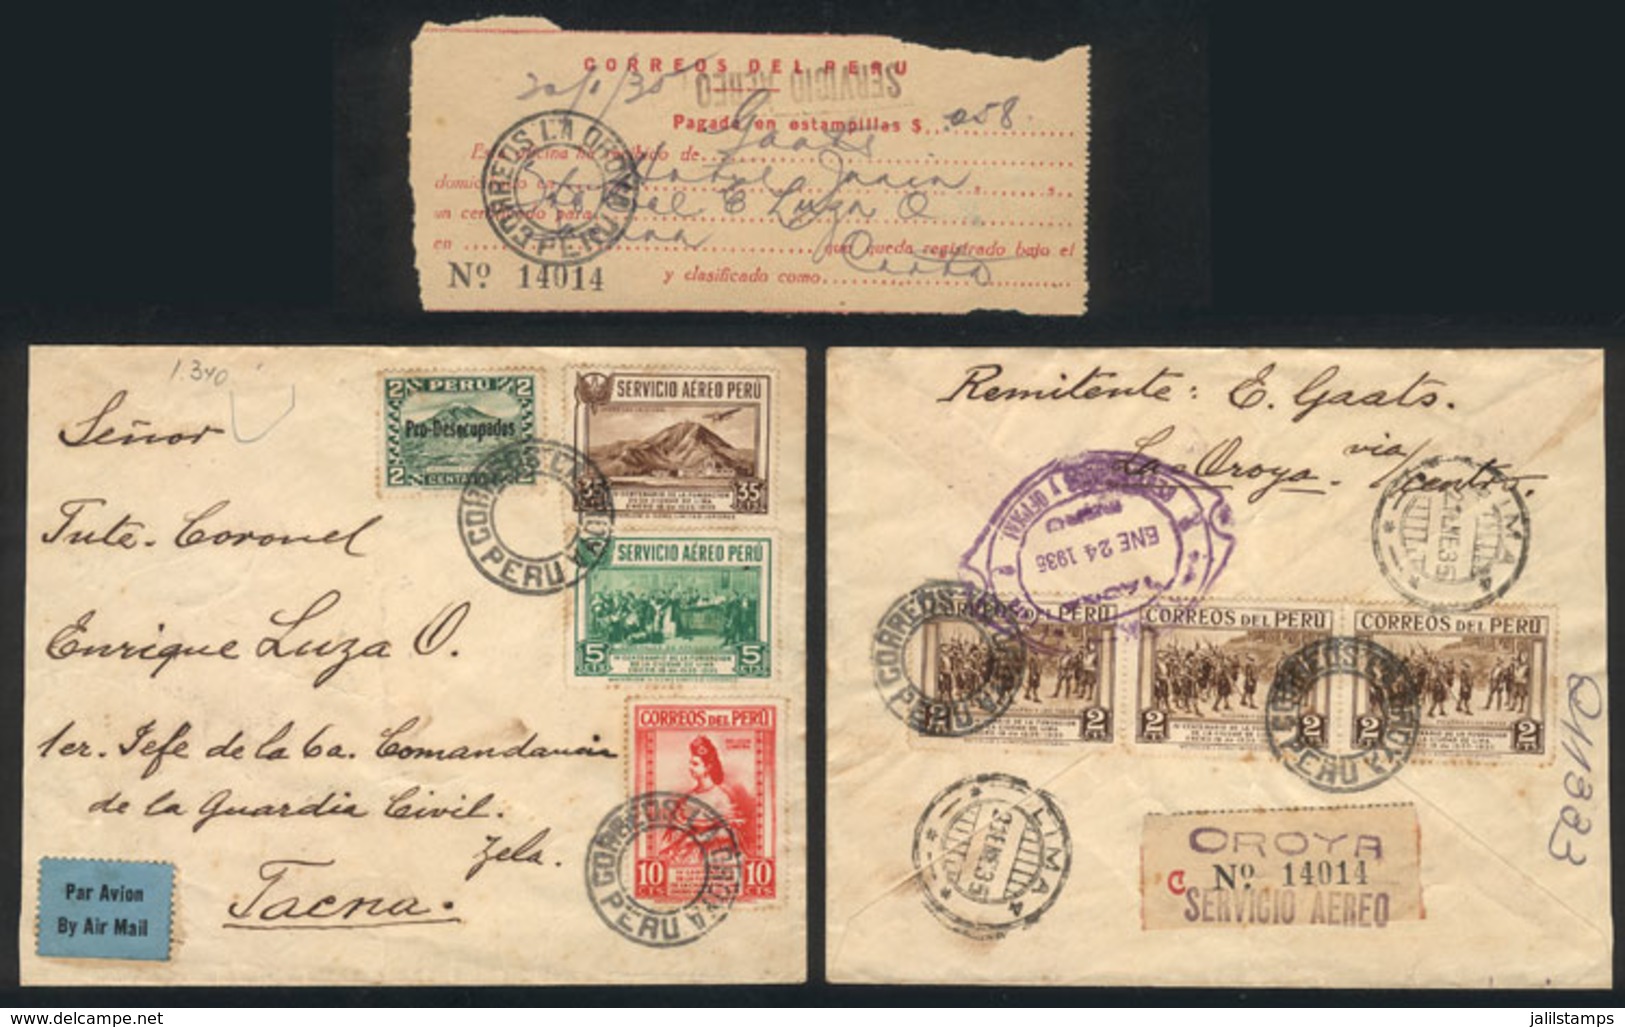 PERU: 20/JA/1935 Oroya - Tacna Via Lima, Registered Airmail Cover With 56c. Postage (1c. Extra) + 2c. Cinderella, With T - Peru